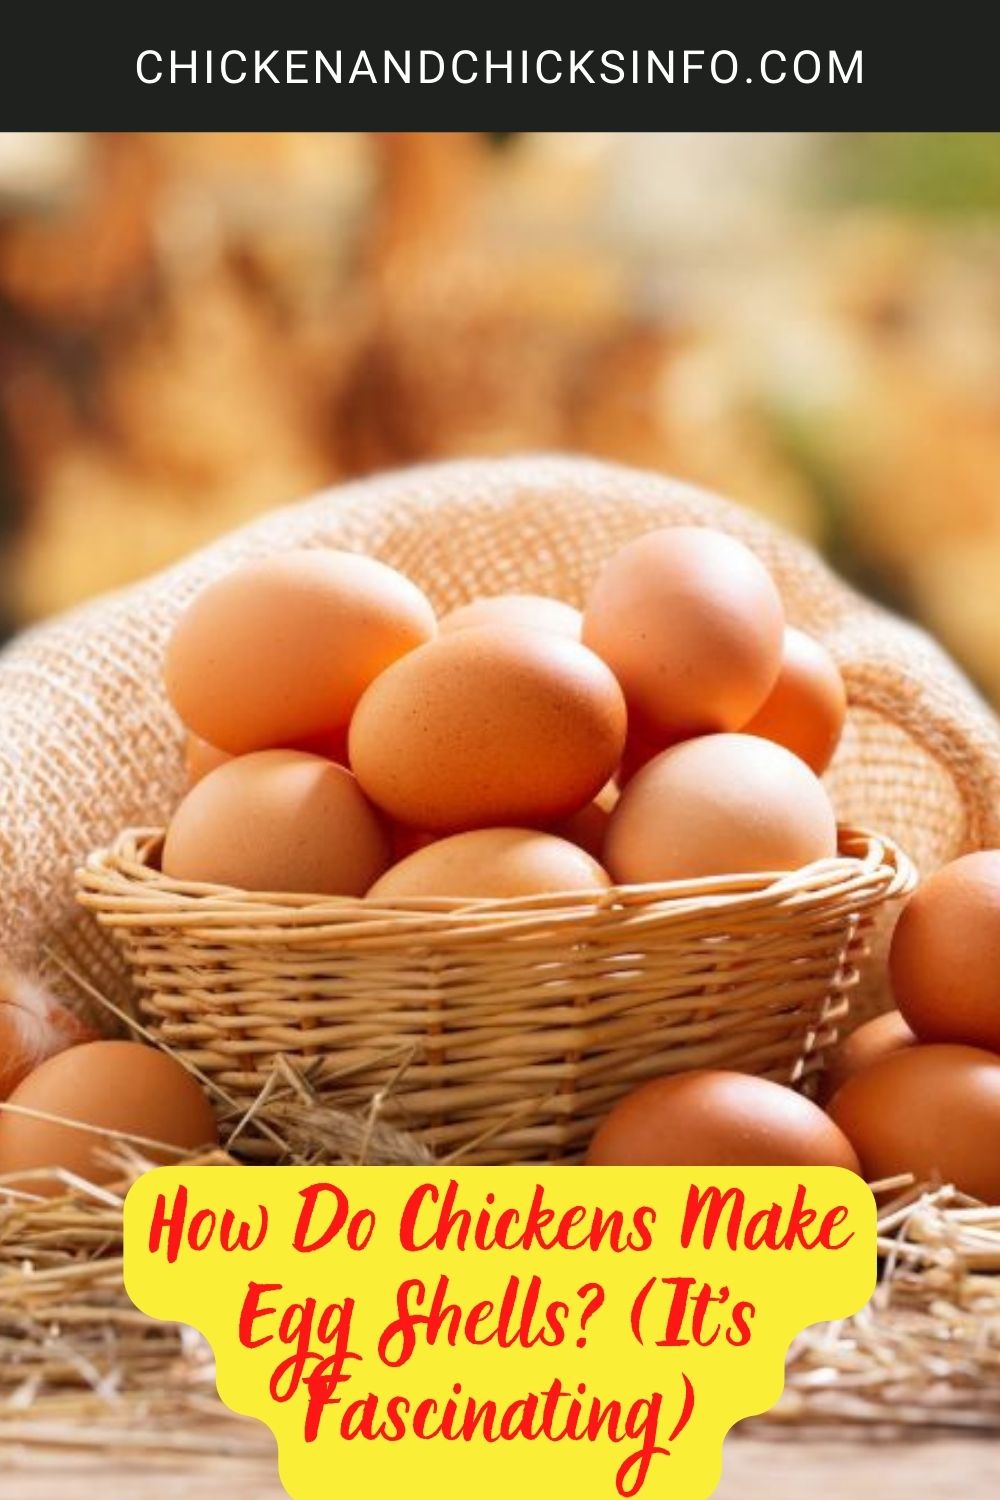 How Do Chickens Make Egg Shells? poster.
